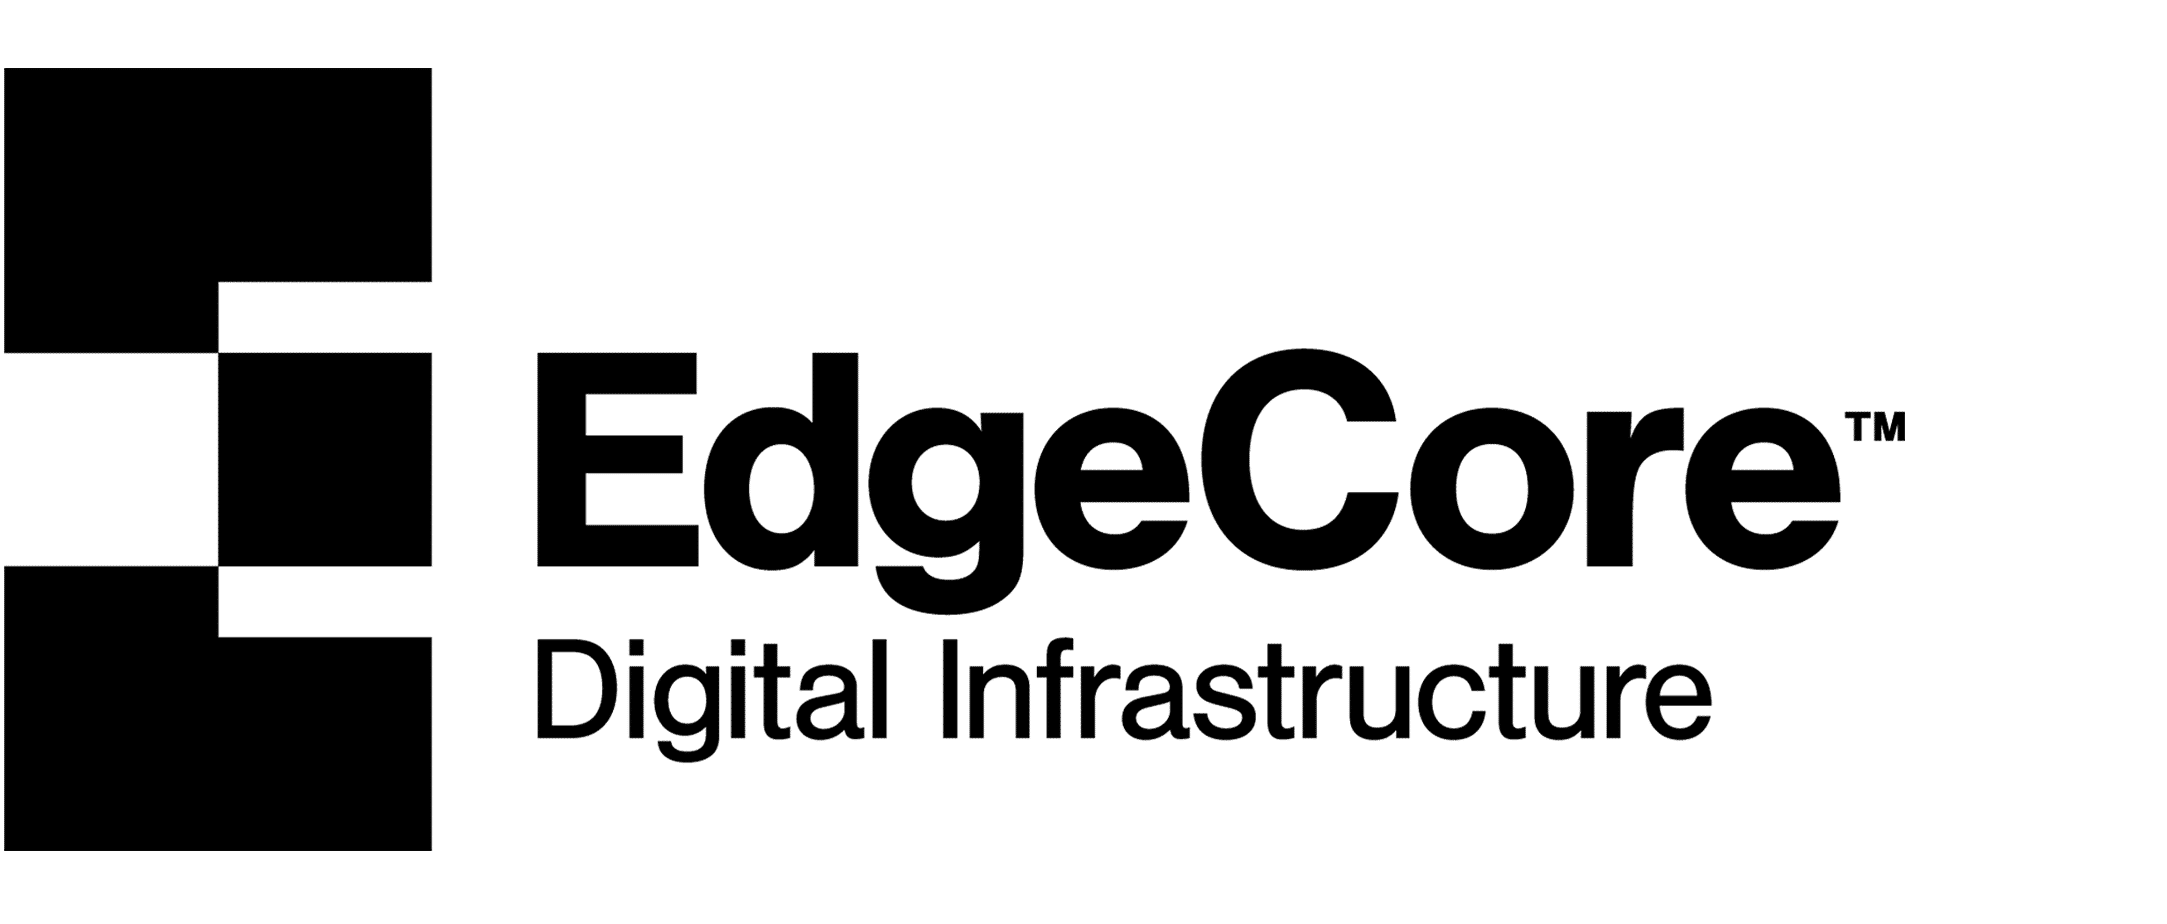 EdgeCore Digital Infrastructure